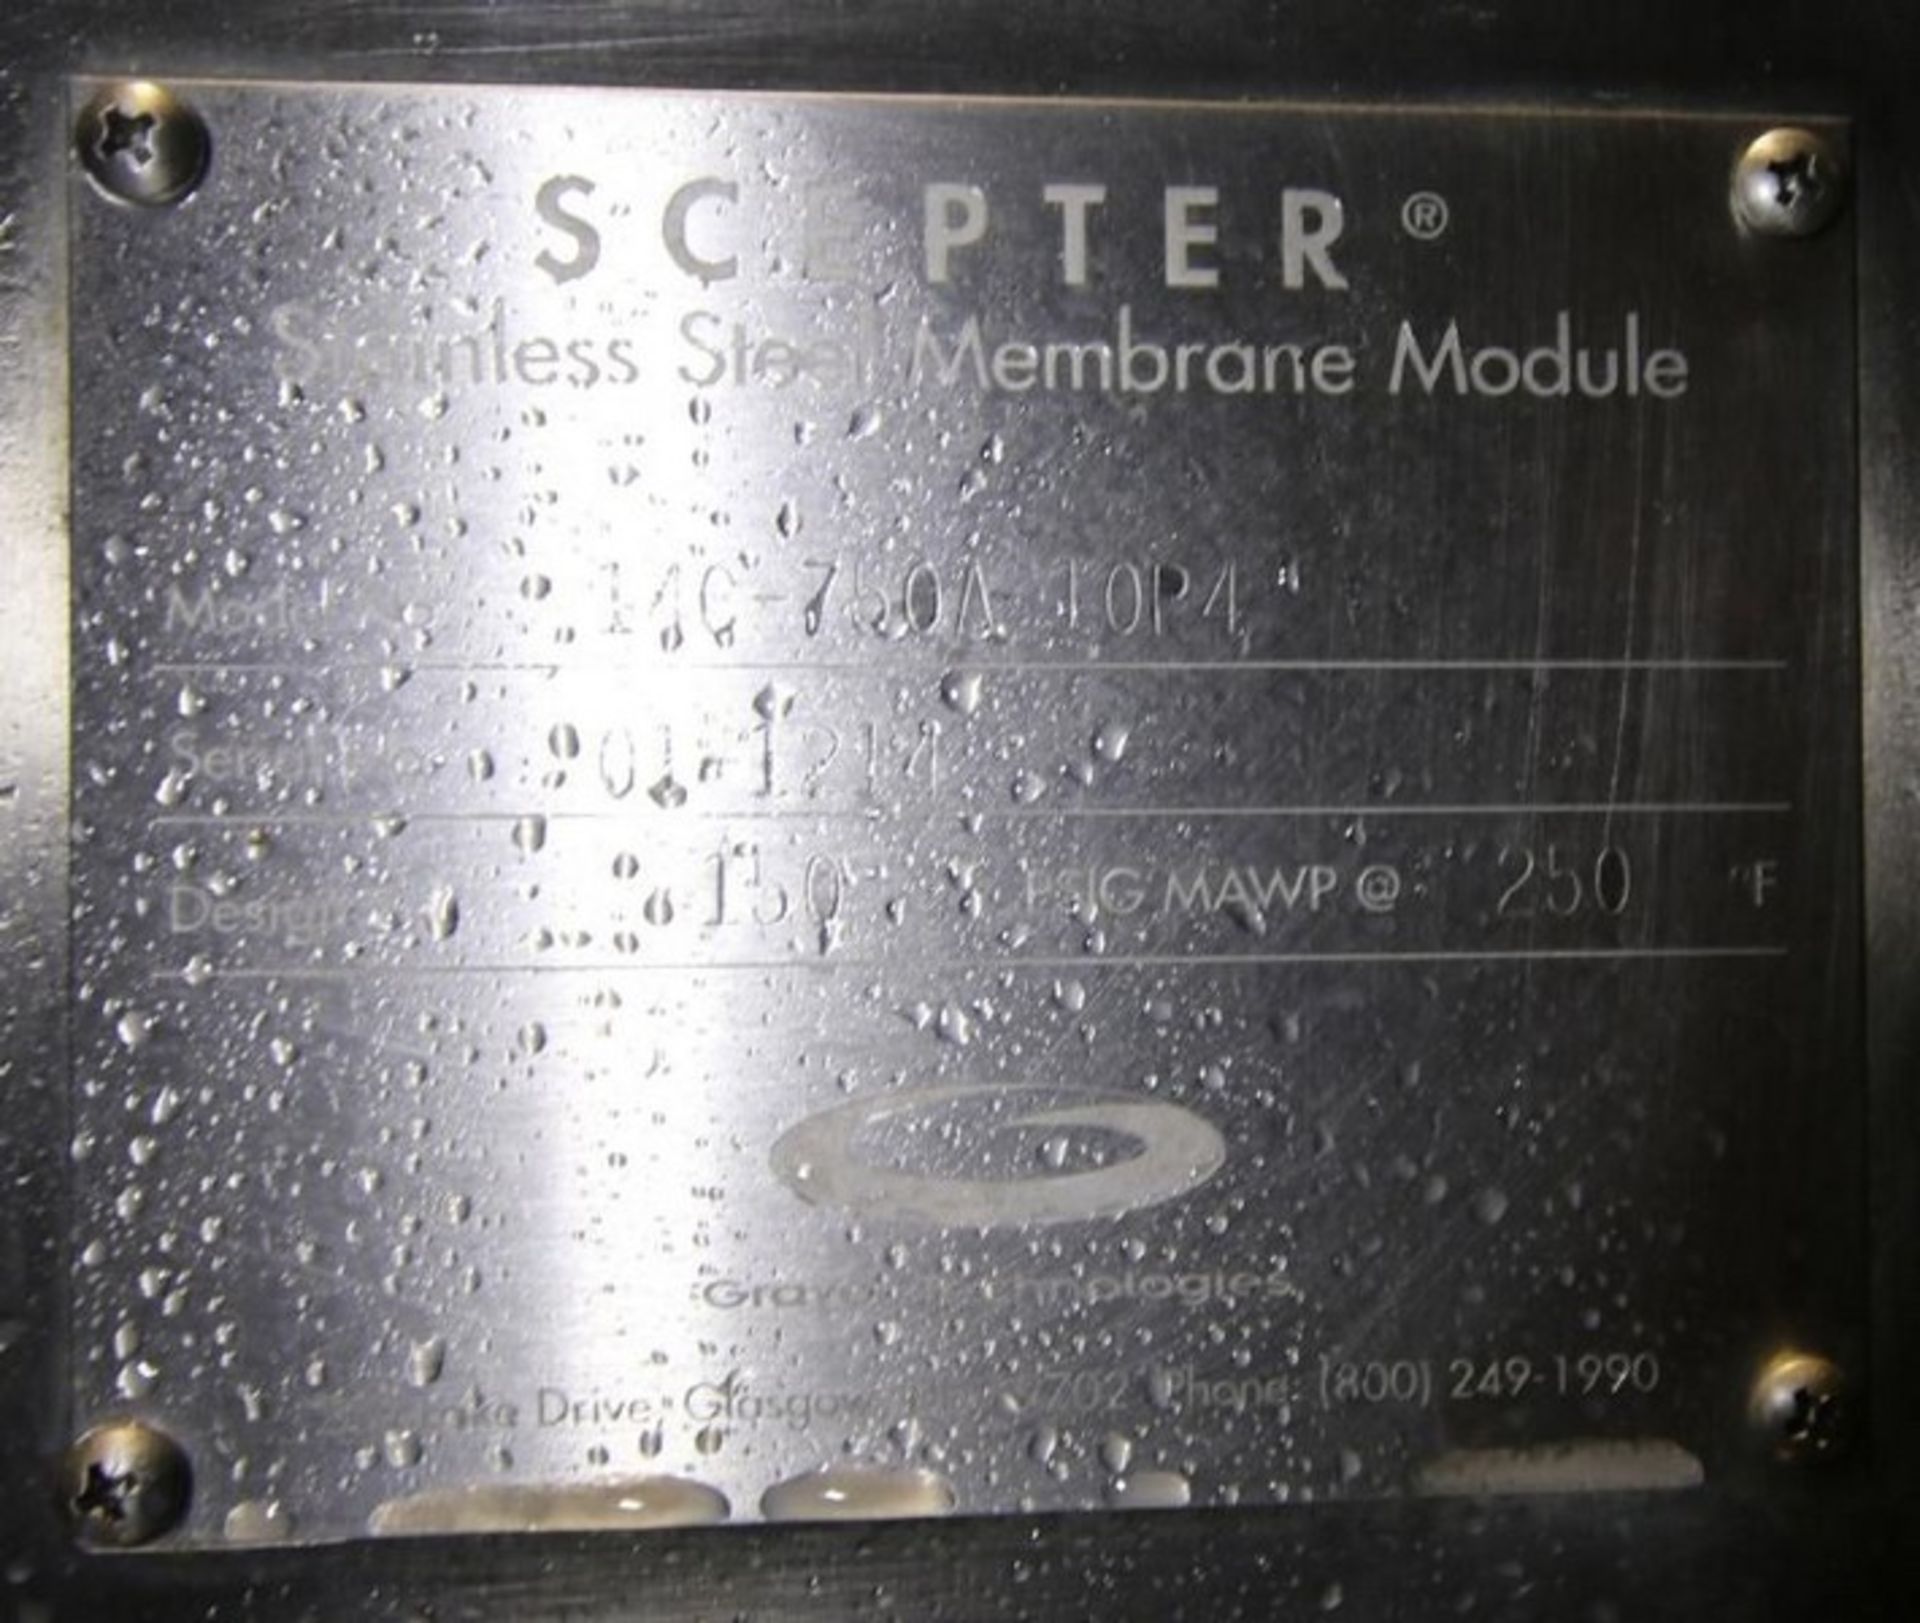 Process Equipment Inc / Scepter 11 ft L x 14" W S/S Membrane Module, Model 14C-750A-10P4, SN 01- - Image 10 of 10